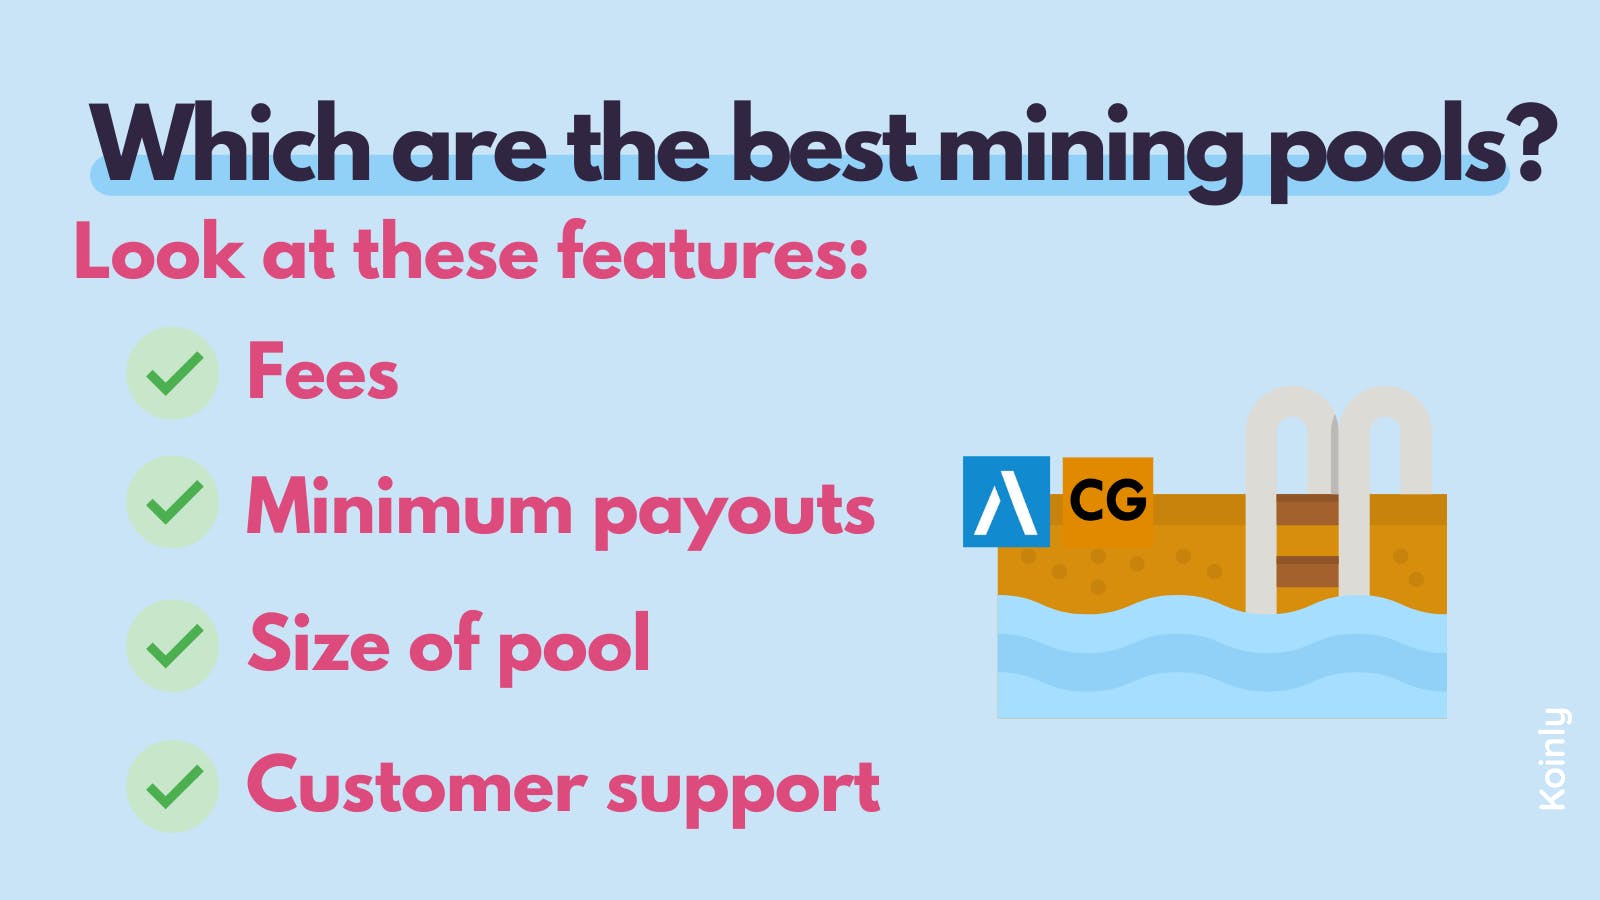 Best mining pools